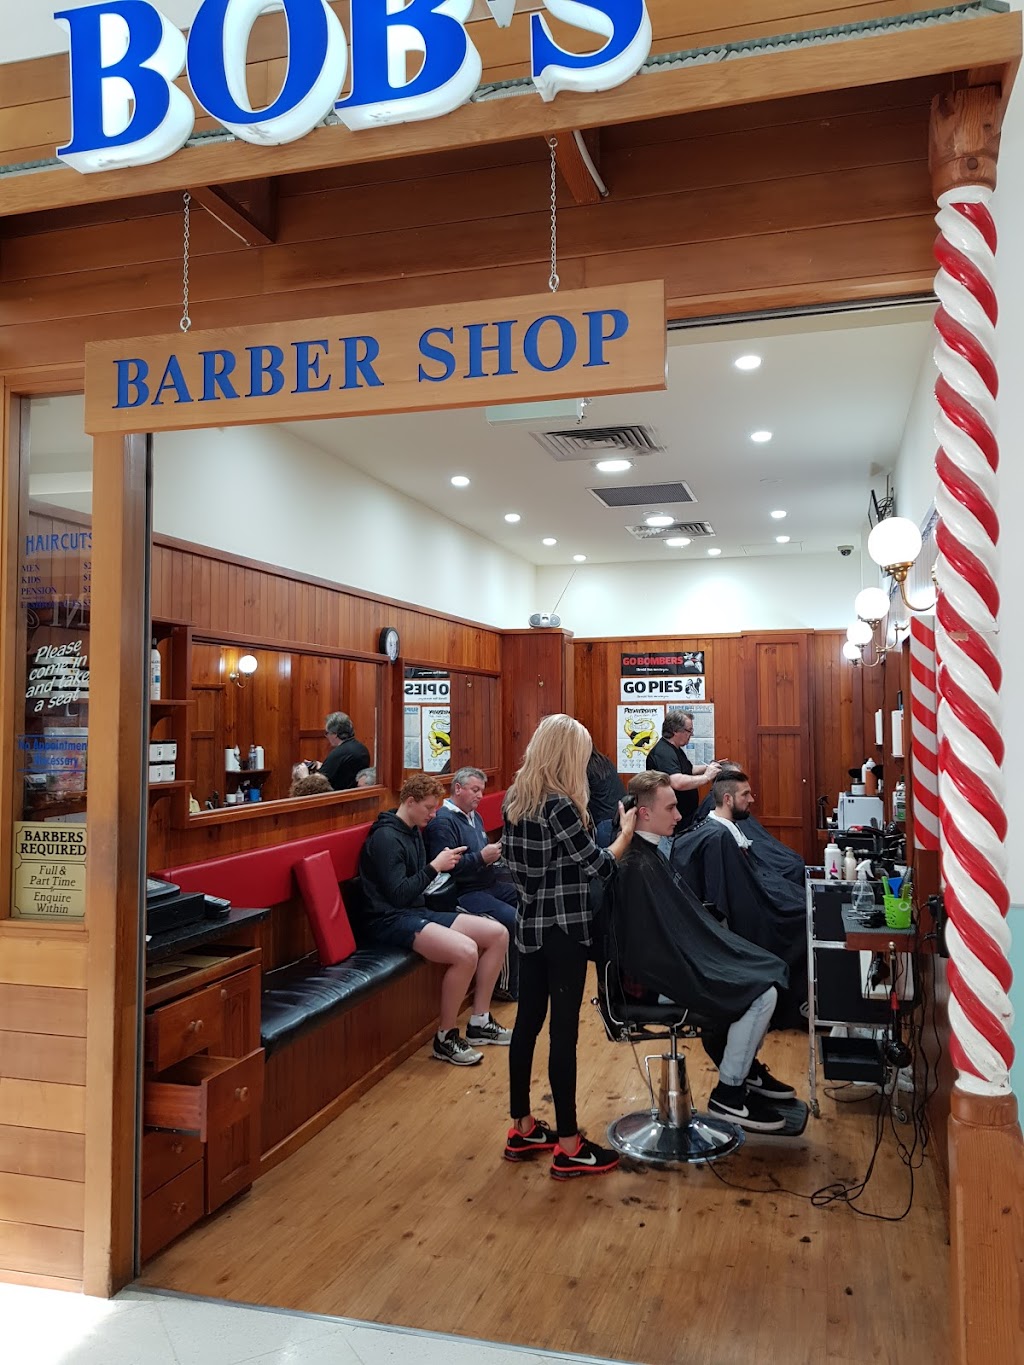 Bobs Barber Shop - Karingal Hub | Shop S110A, 330 Cranbourne Rd, Frankston VIC 3199, Australia | Phone: (03) 9789 2866